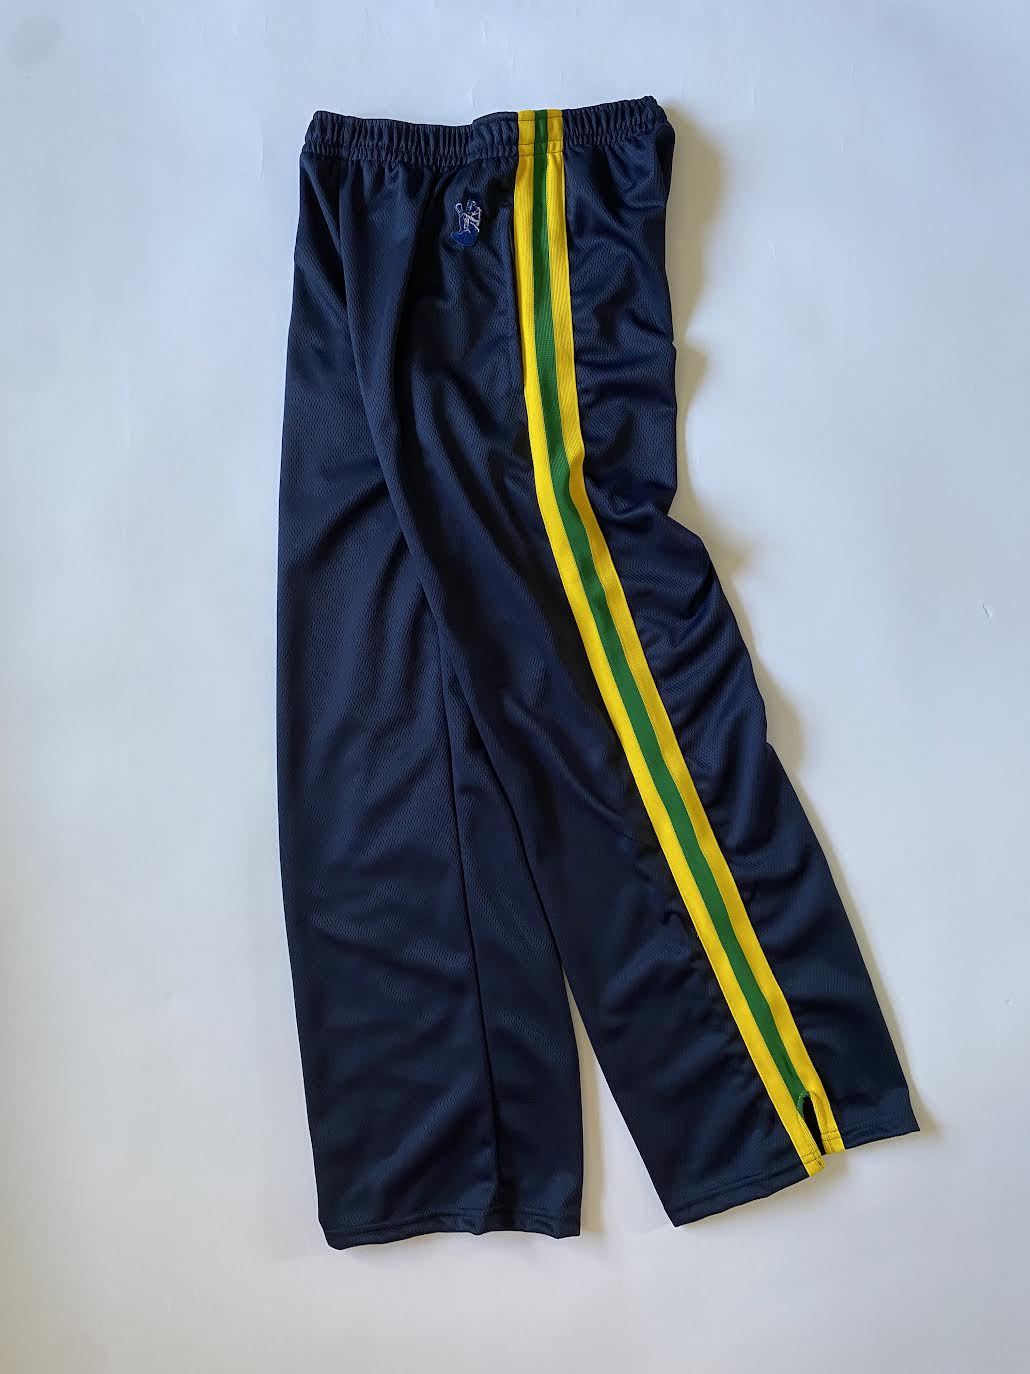 RLB LAX PANT in Navy Miracle Mesh* w/ Yellow, Dark Green, Yellow Knit Stripe